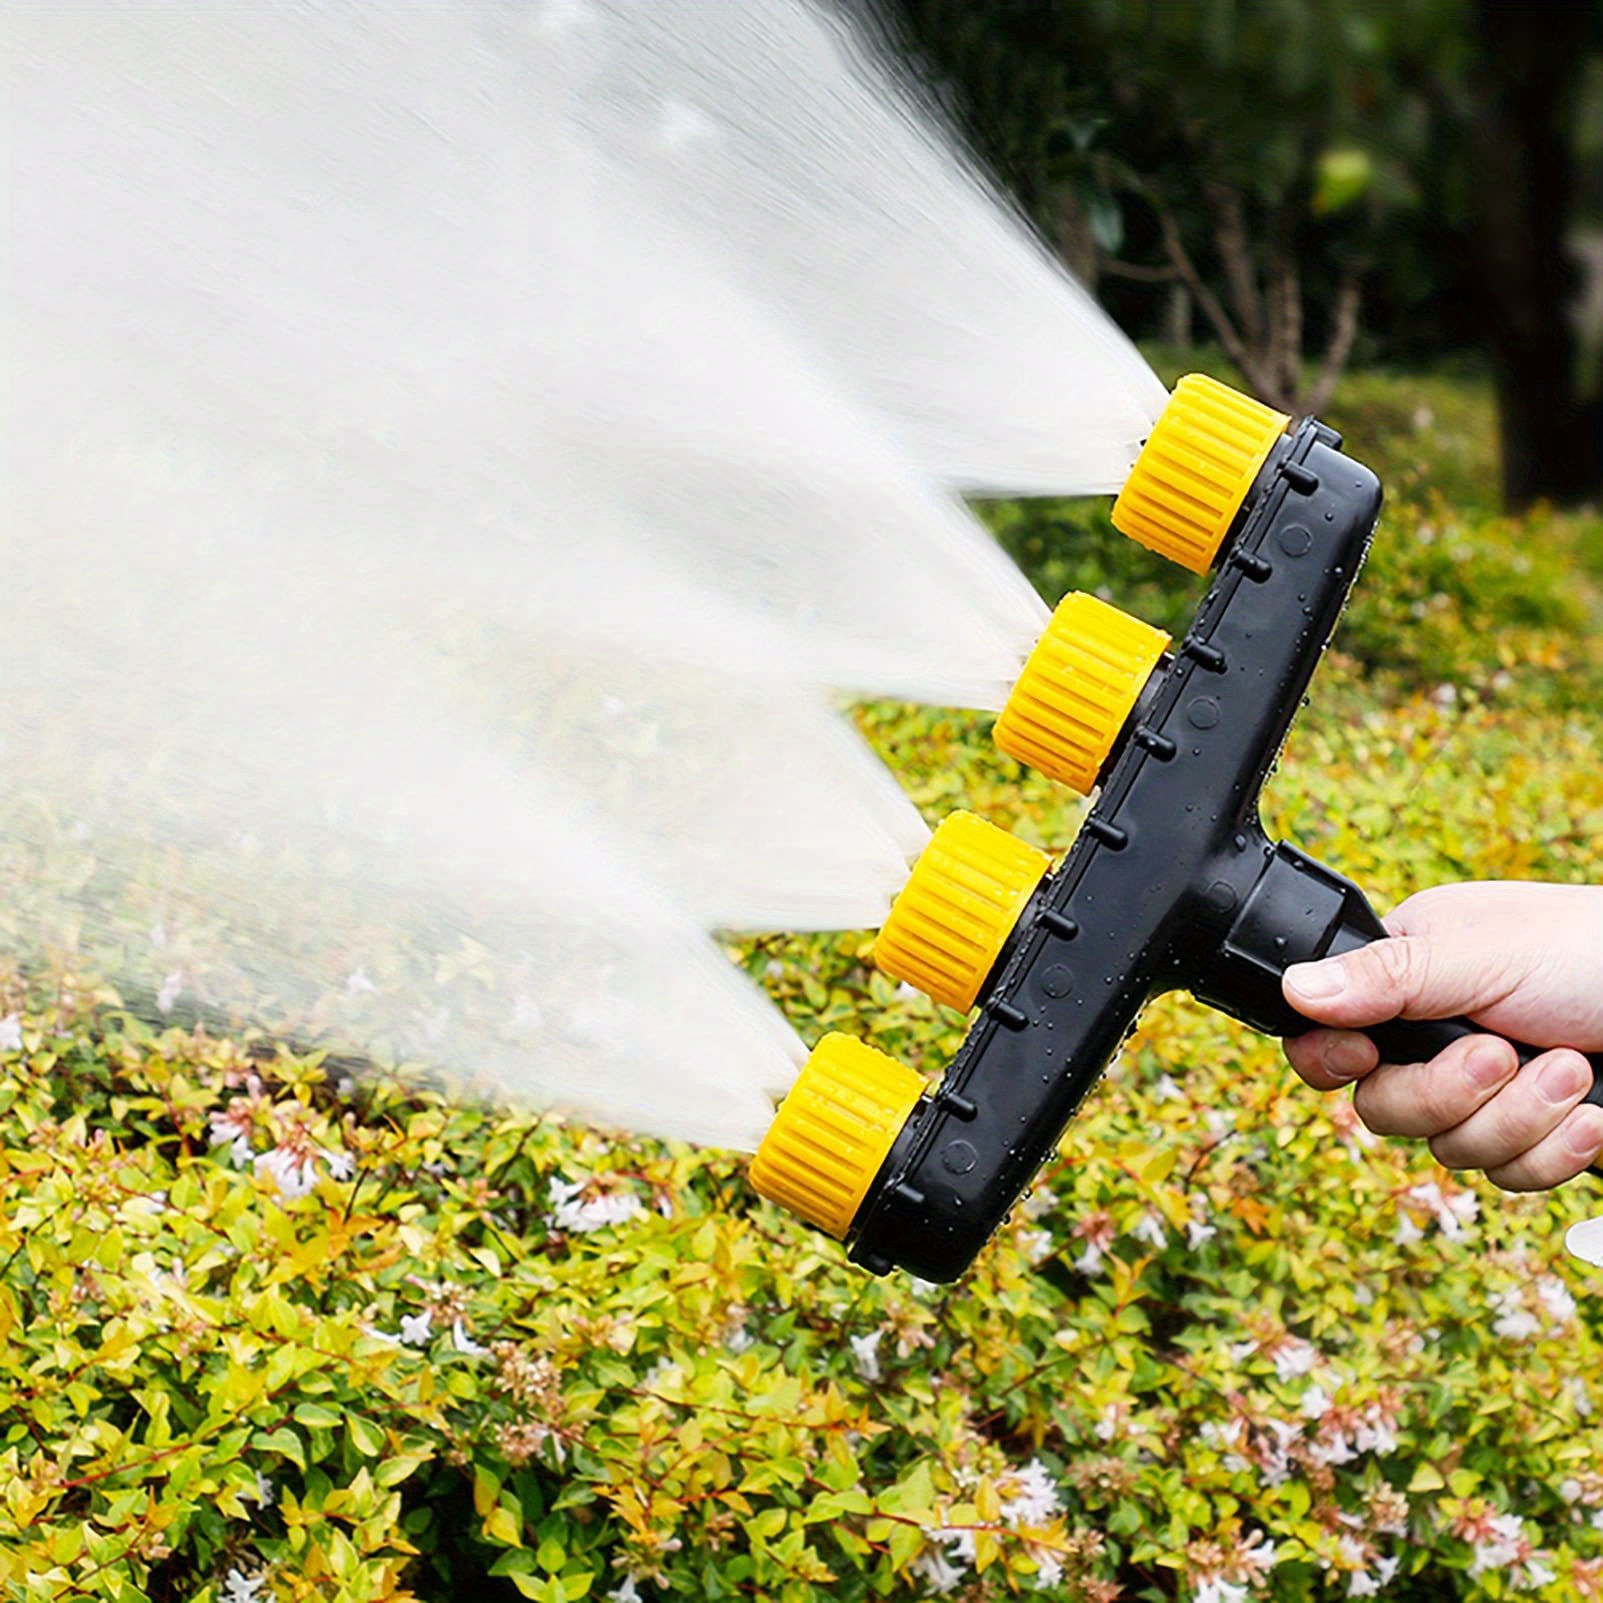 

Adjustable Garden Hose Nozzle Sprayer - Versatile Watering Patterns For Plants, Pets & Car Wash - Durable Plastic, Handheld Design